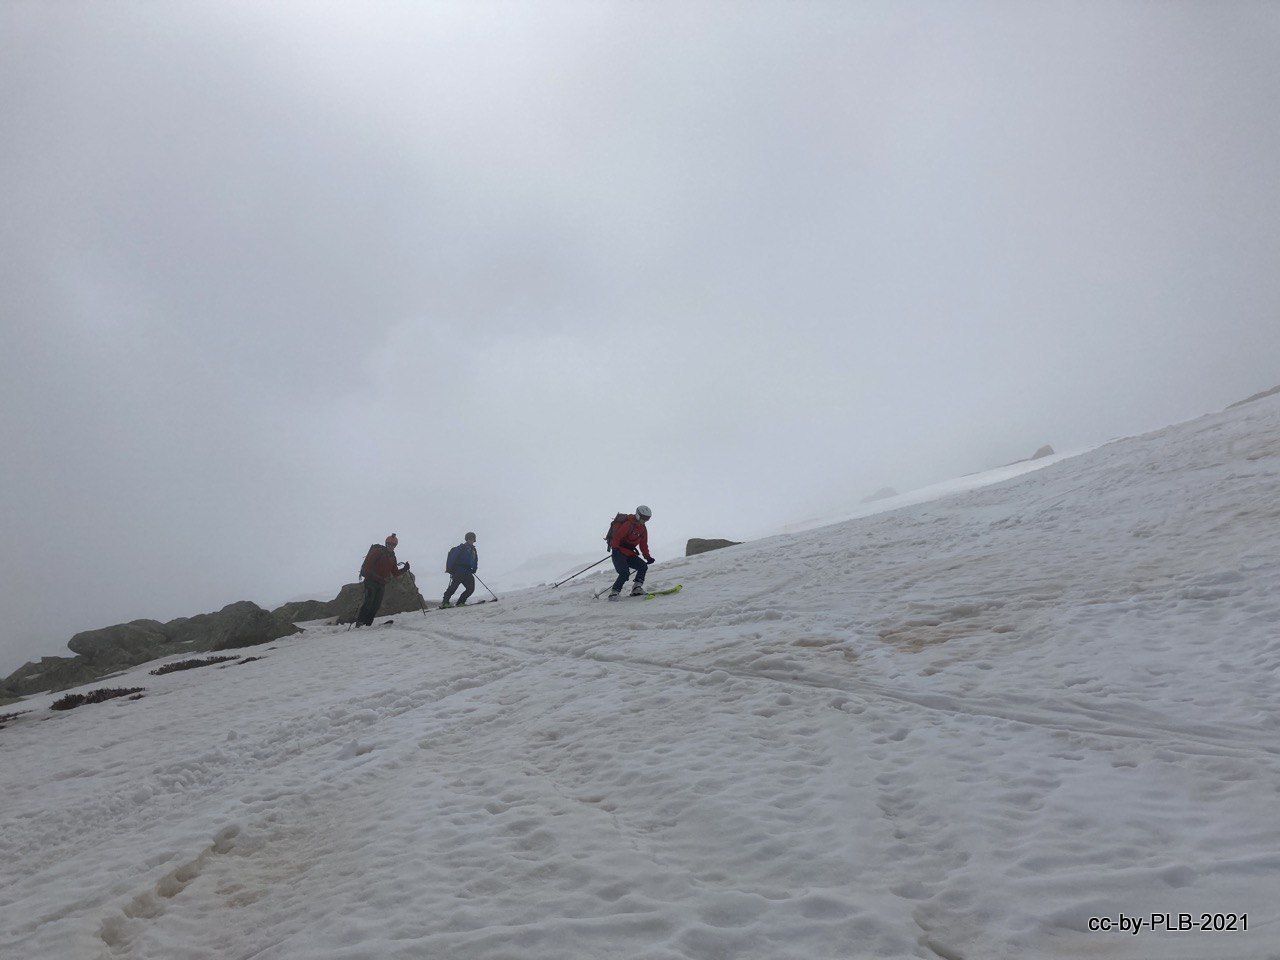 Esquiando en el Macizo de la Maladeta | 16-mayo 